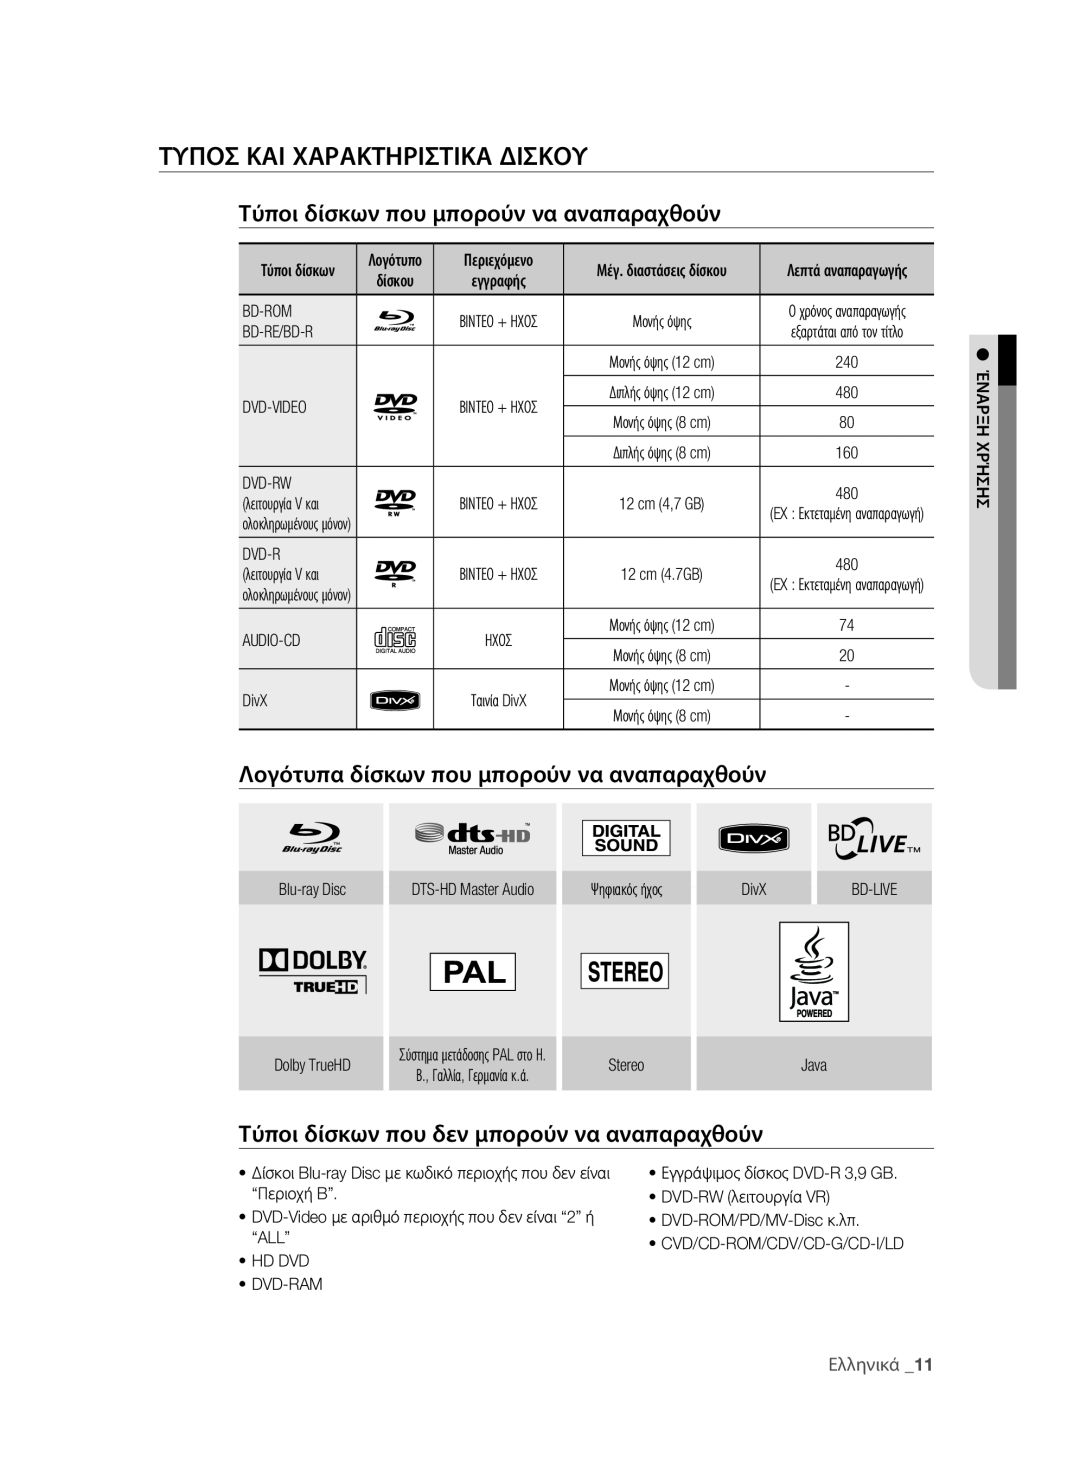 Samsung BD-P1580/EDC manual Τυποσ και χαρακτηριστικα δισκου, Τύποι δίσκων που μπορούν να αναπαραχθούν, Ελληνικά 